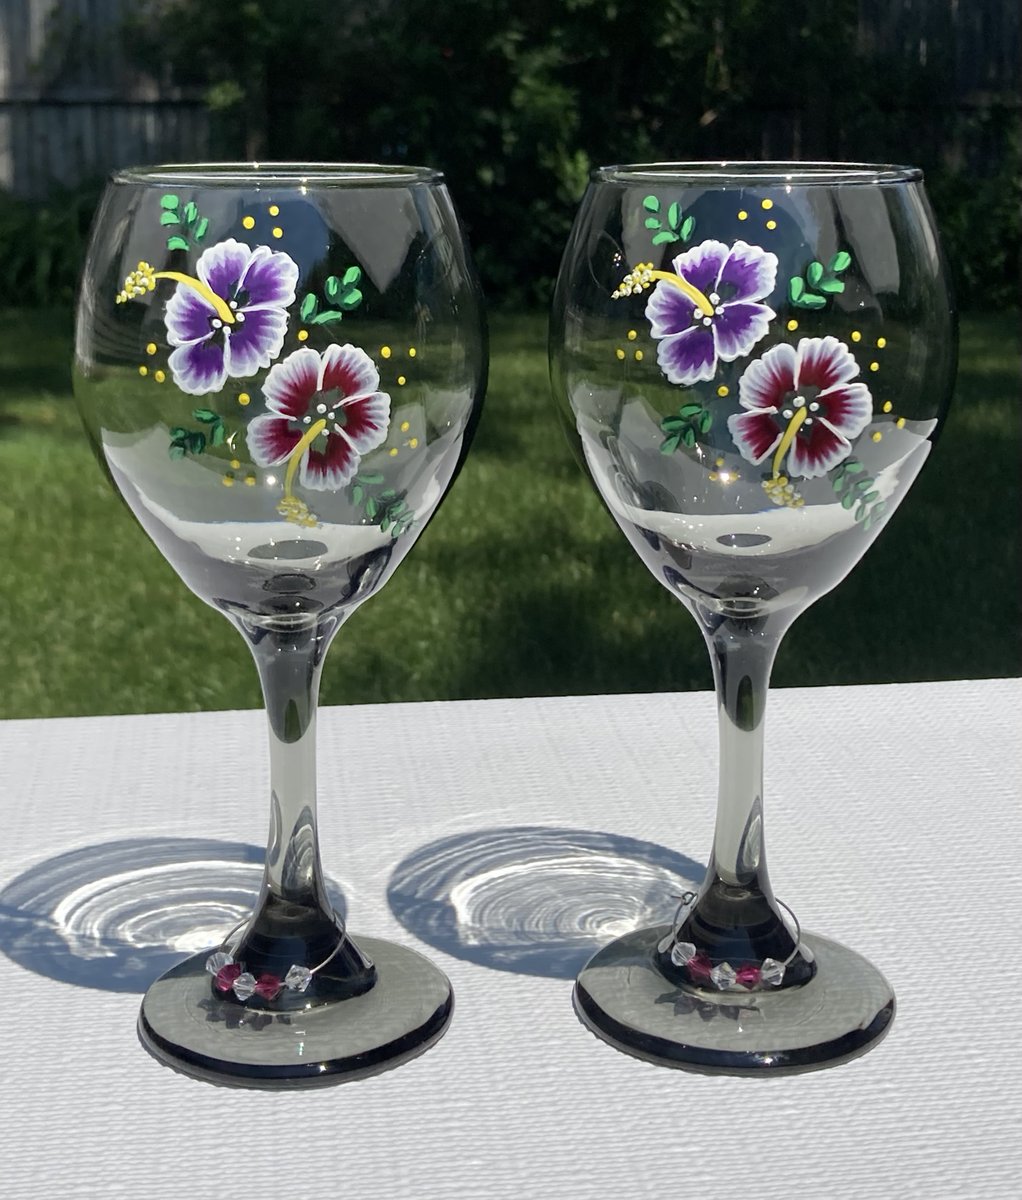 These eye catching wine glasses will make a great gift etsy.com/listing/122463… #wineglasses #giftideas #etsy #SMILEtt23 #CraftBizParty #mothersdaygift #etsyshop